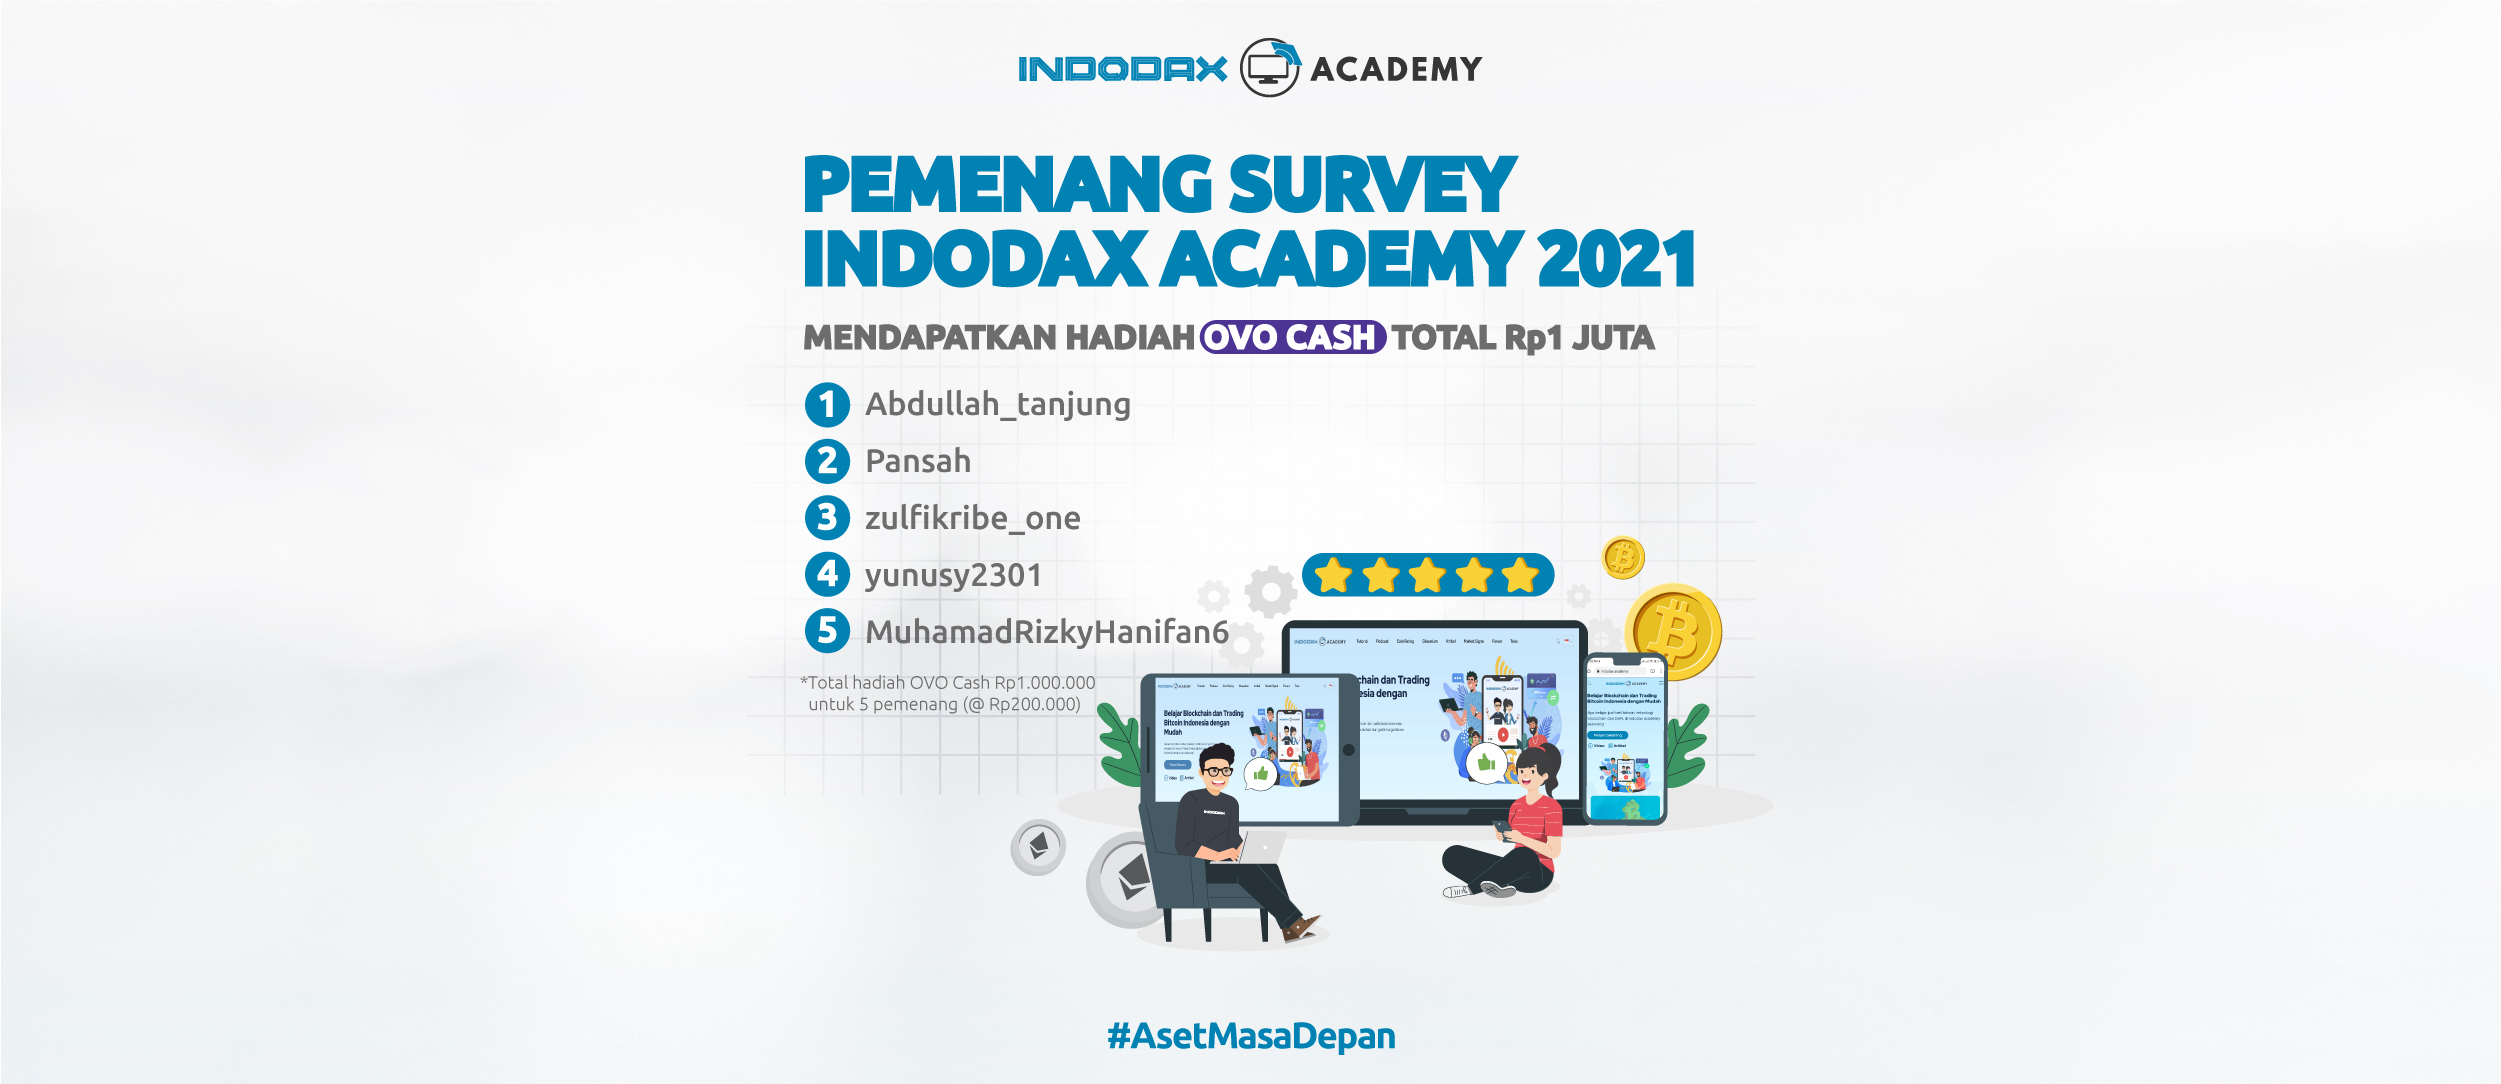 Pemenang Survey Indodax Academy 2021